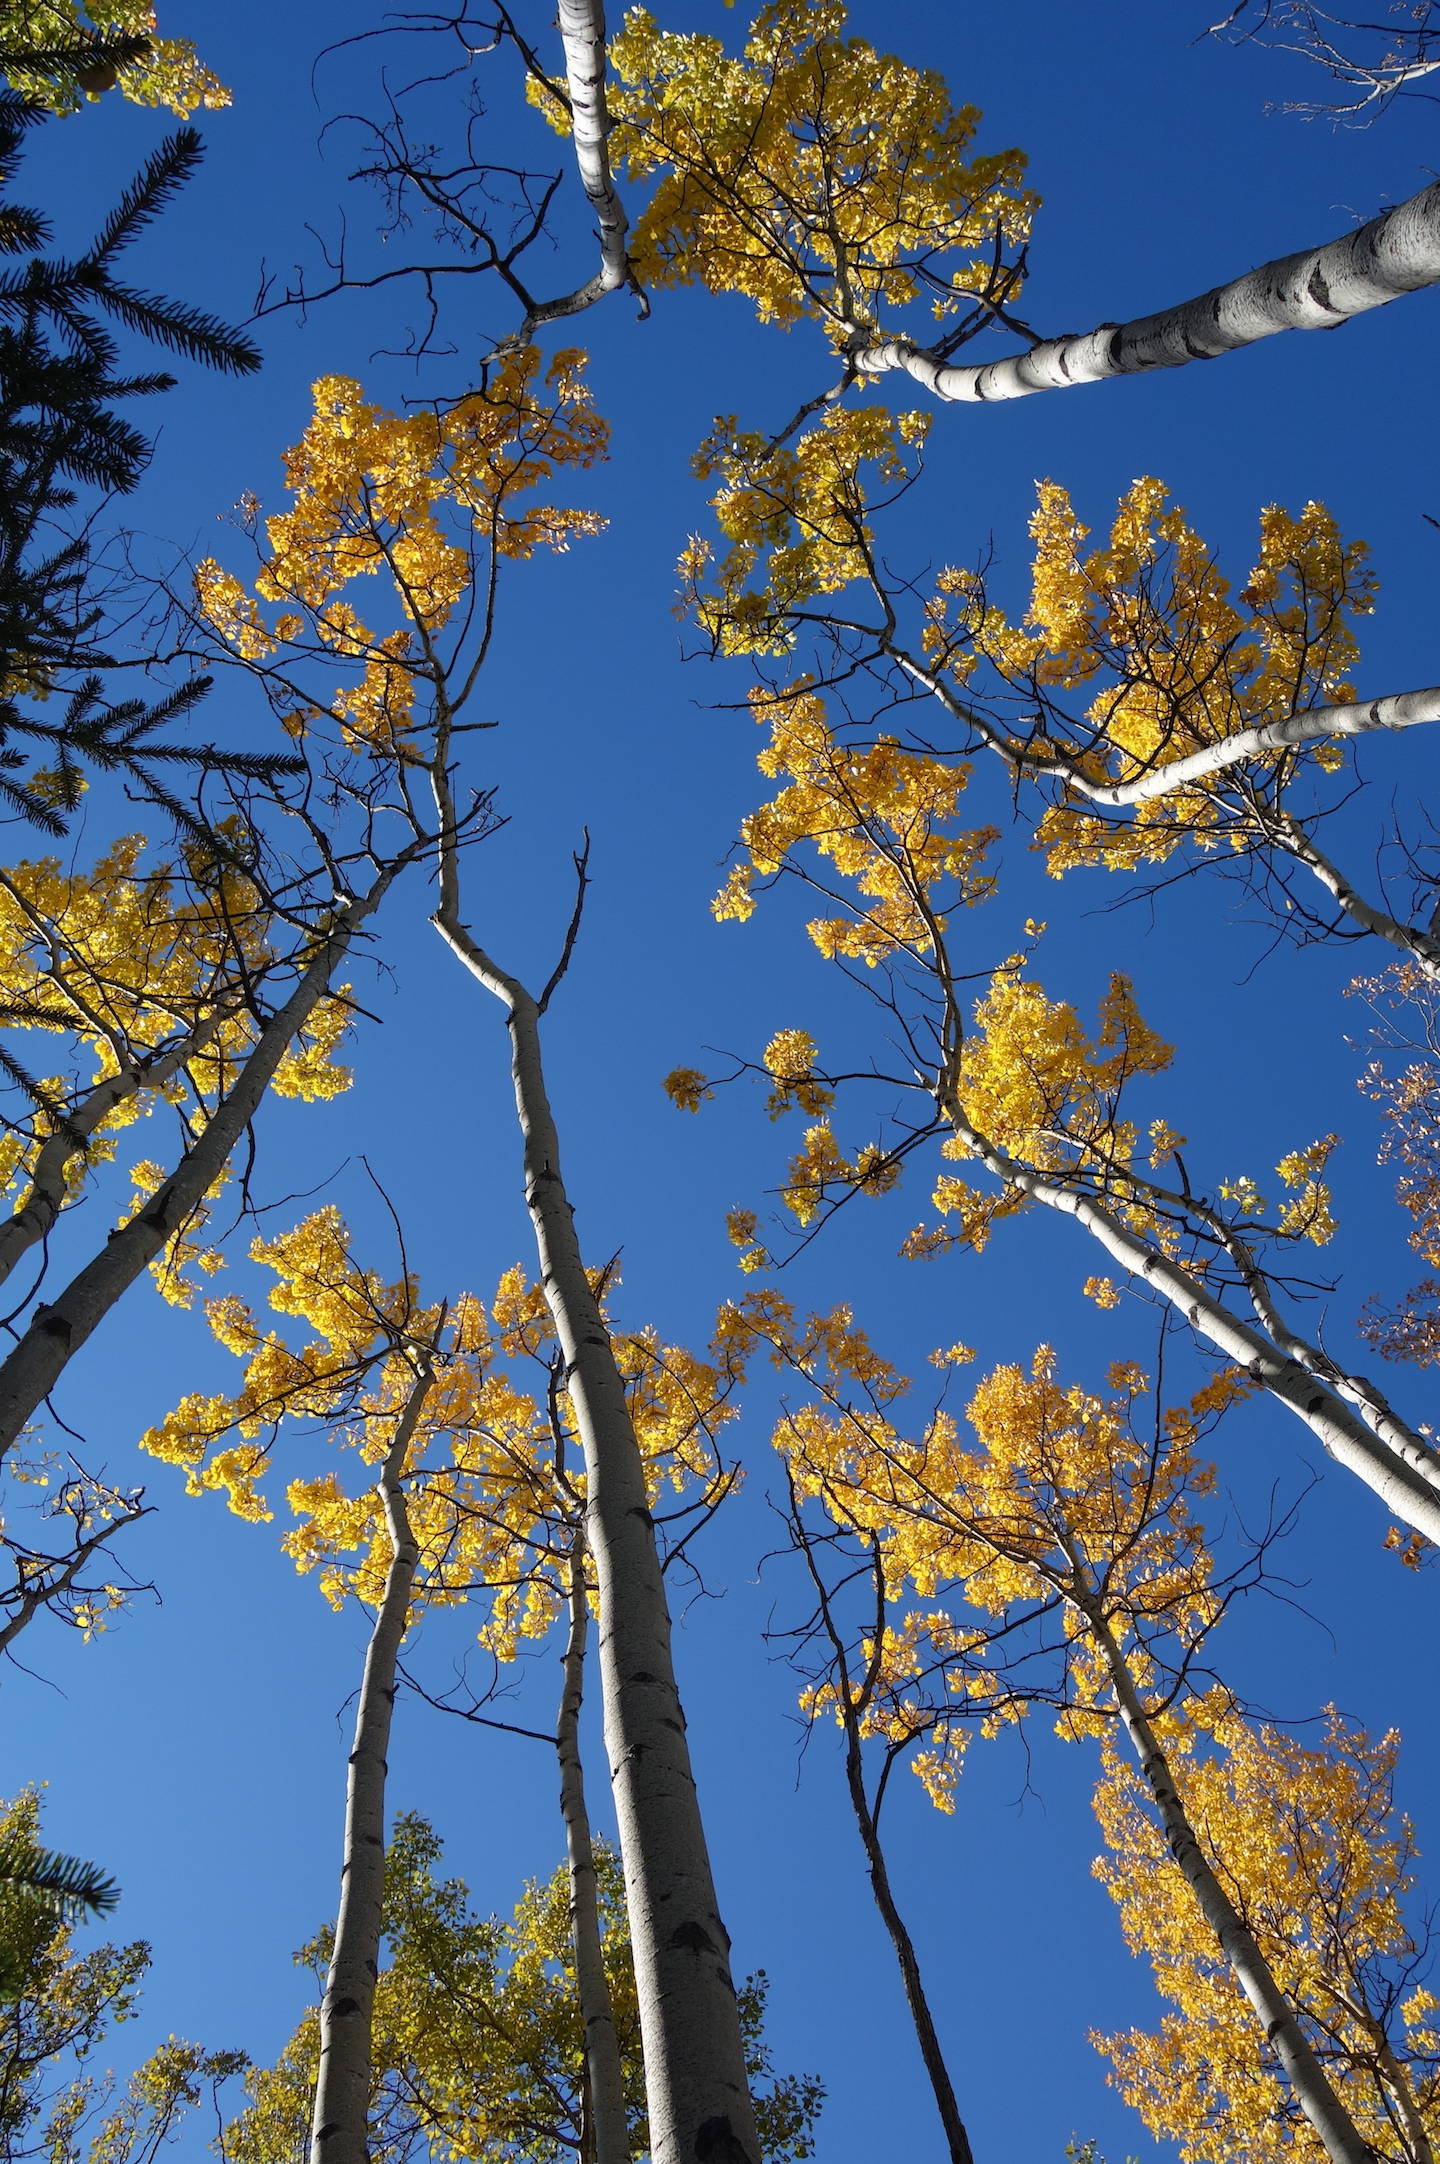 Aspen trees near Glennallen show signs of the changing seasons. (Courtesy Photo / Ned Rozell)